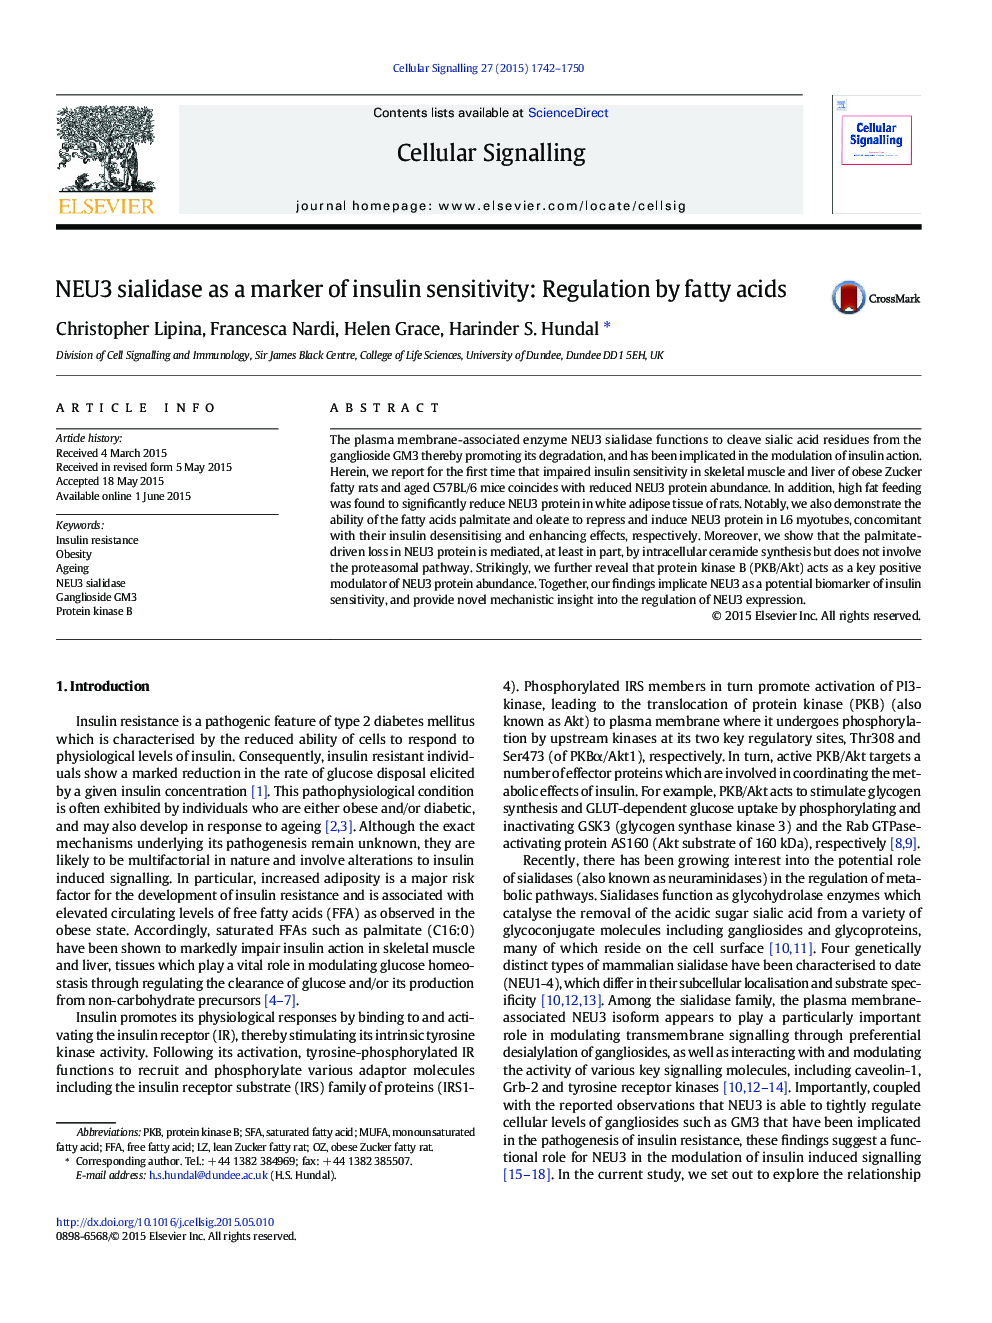 NEU3 sialidase as a marker of insulin sensitivity: Regulation by fatty acids